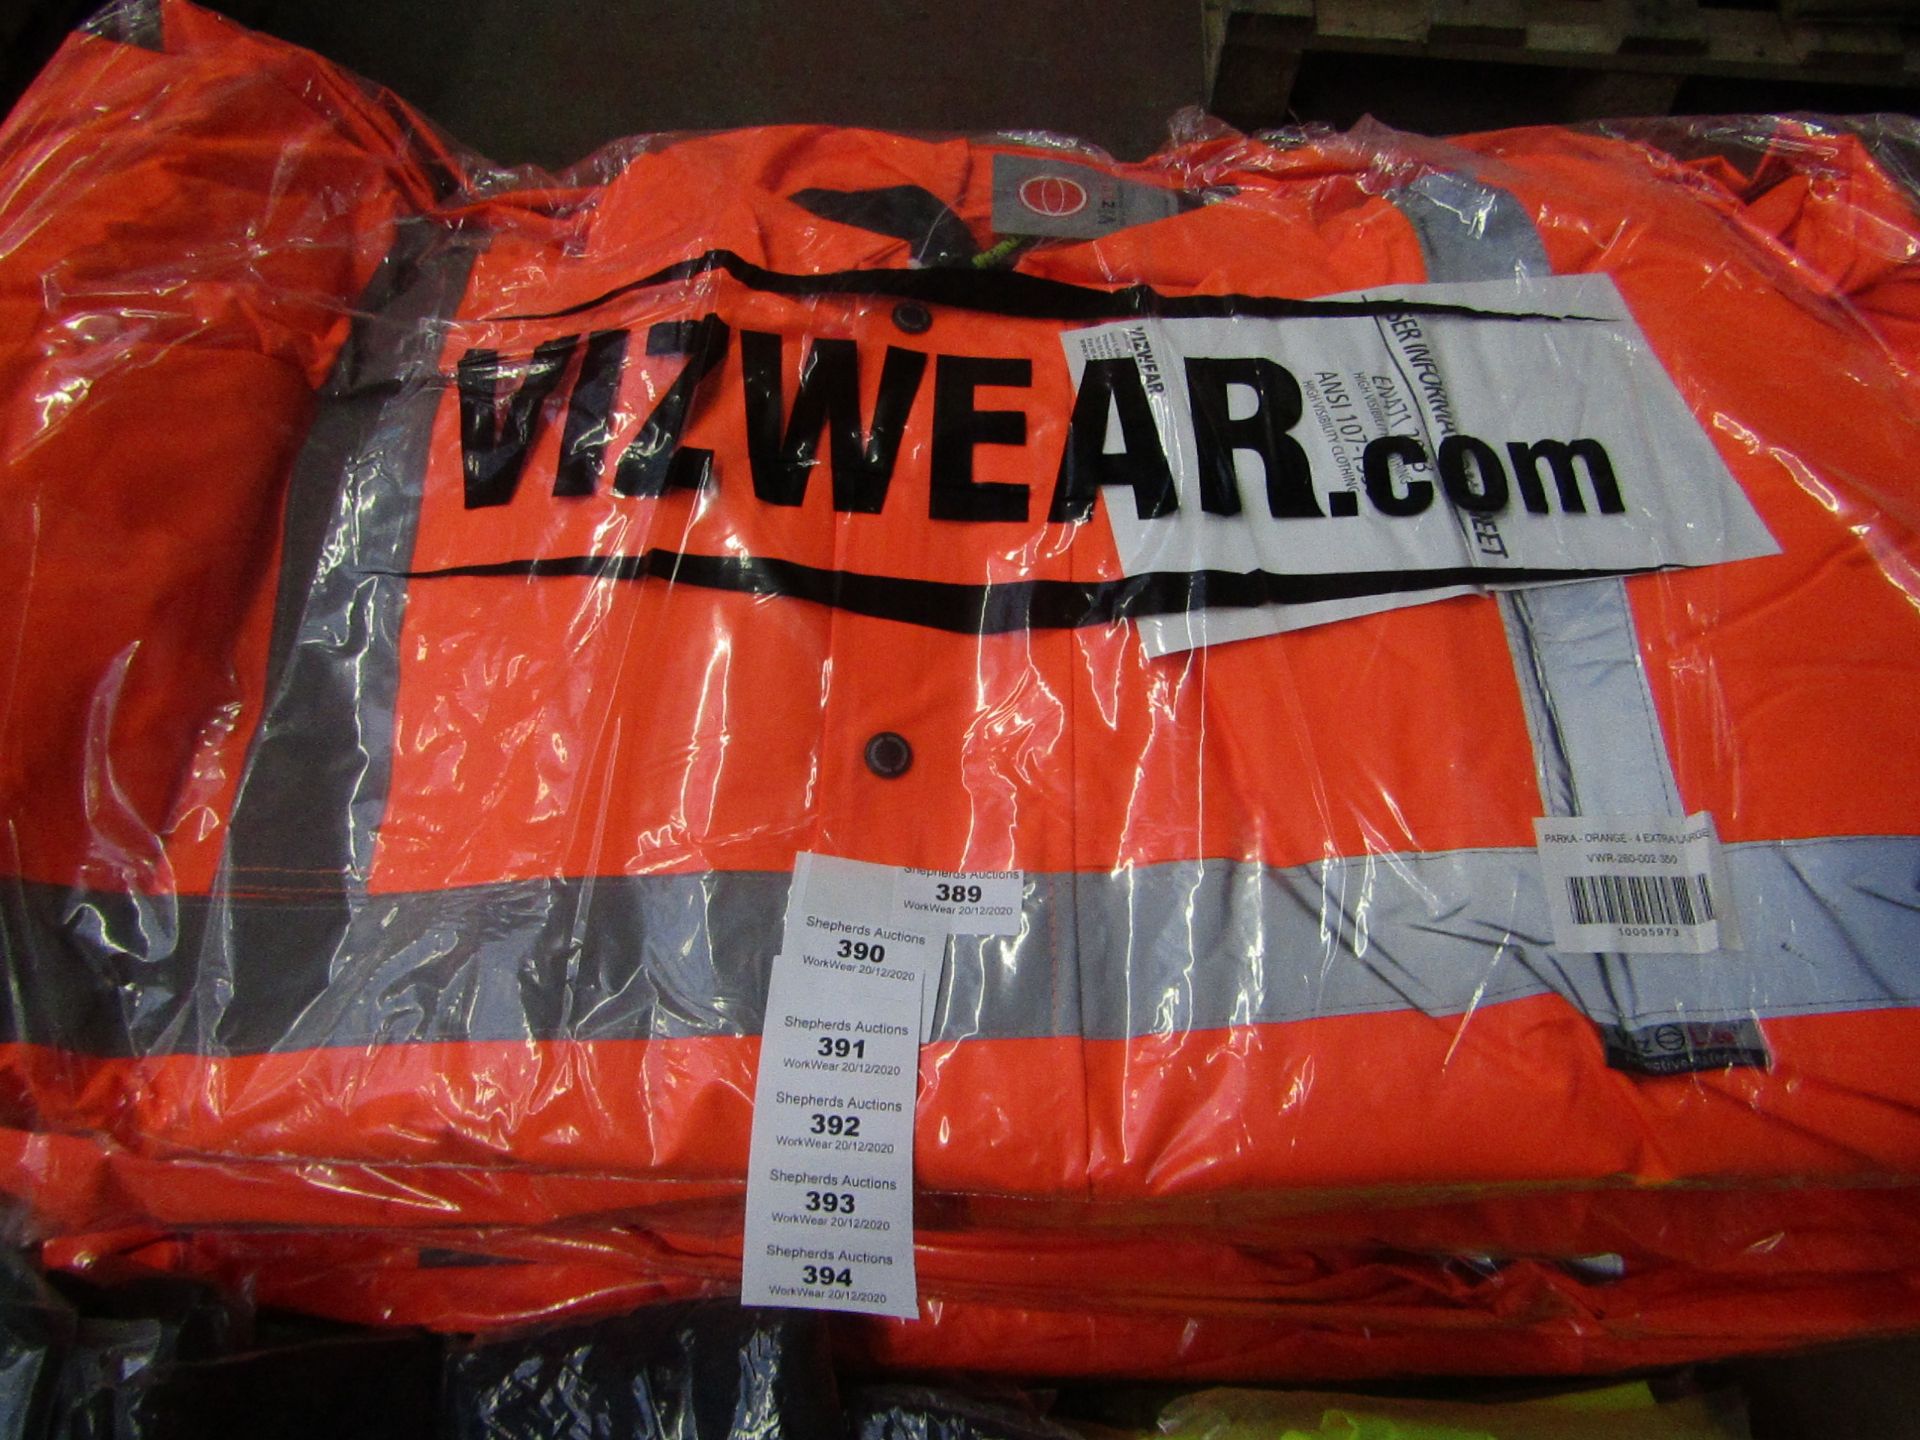 Vizwear - Hi-Vis Orange Parka Coat - Size 4XL - Unused & Packaged.